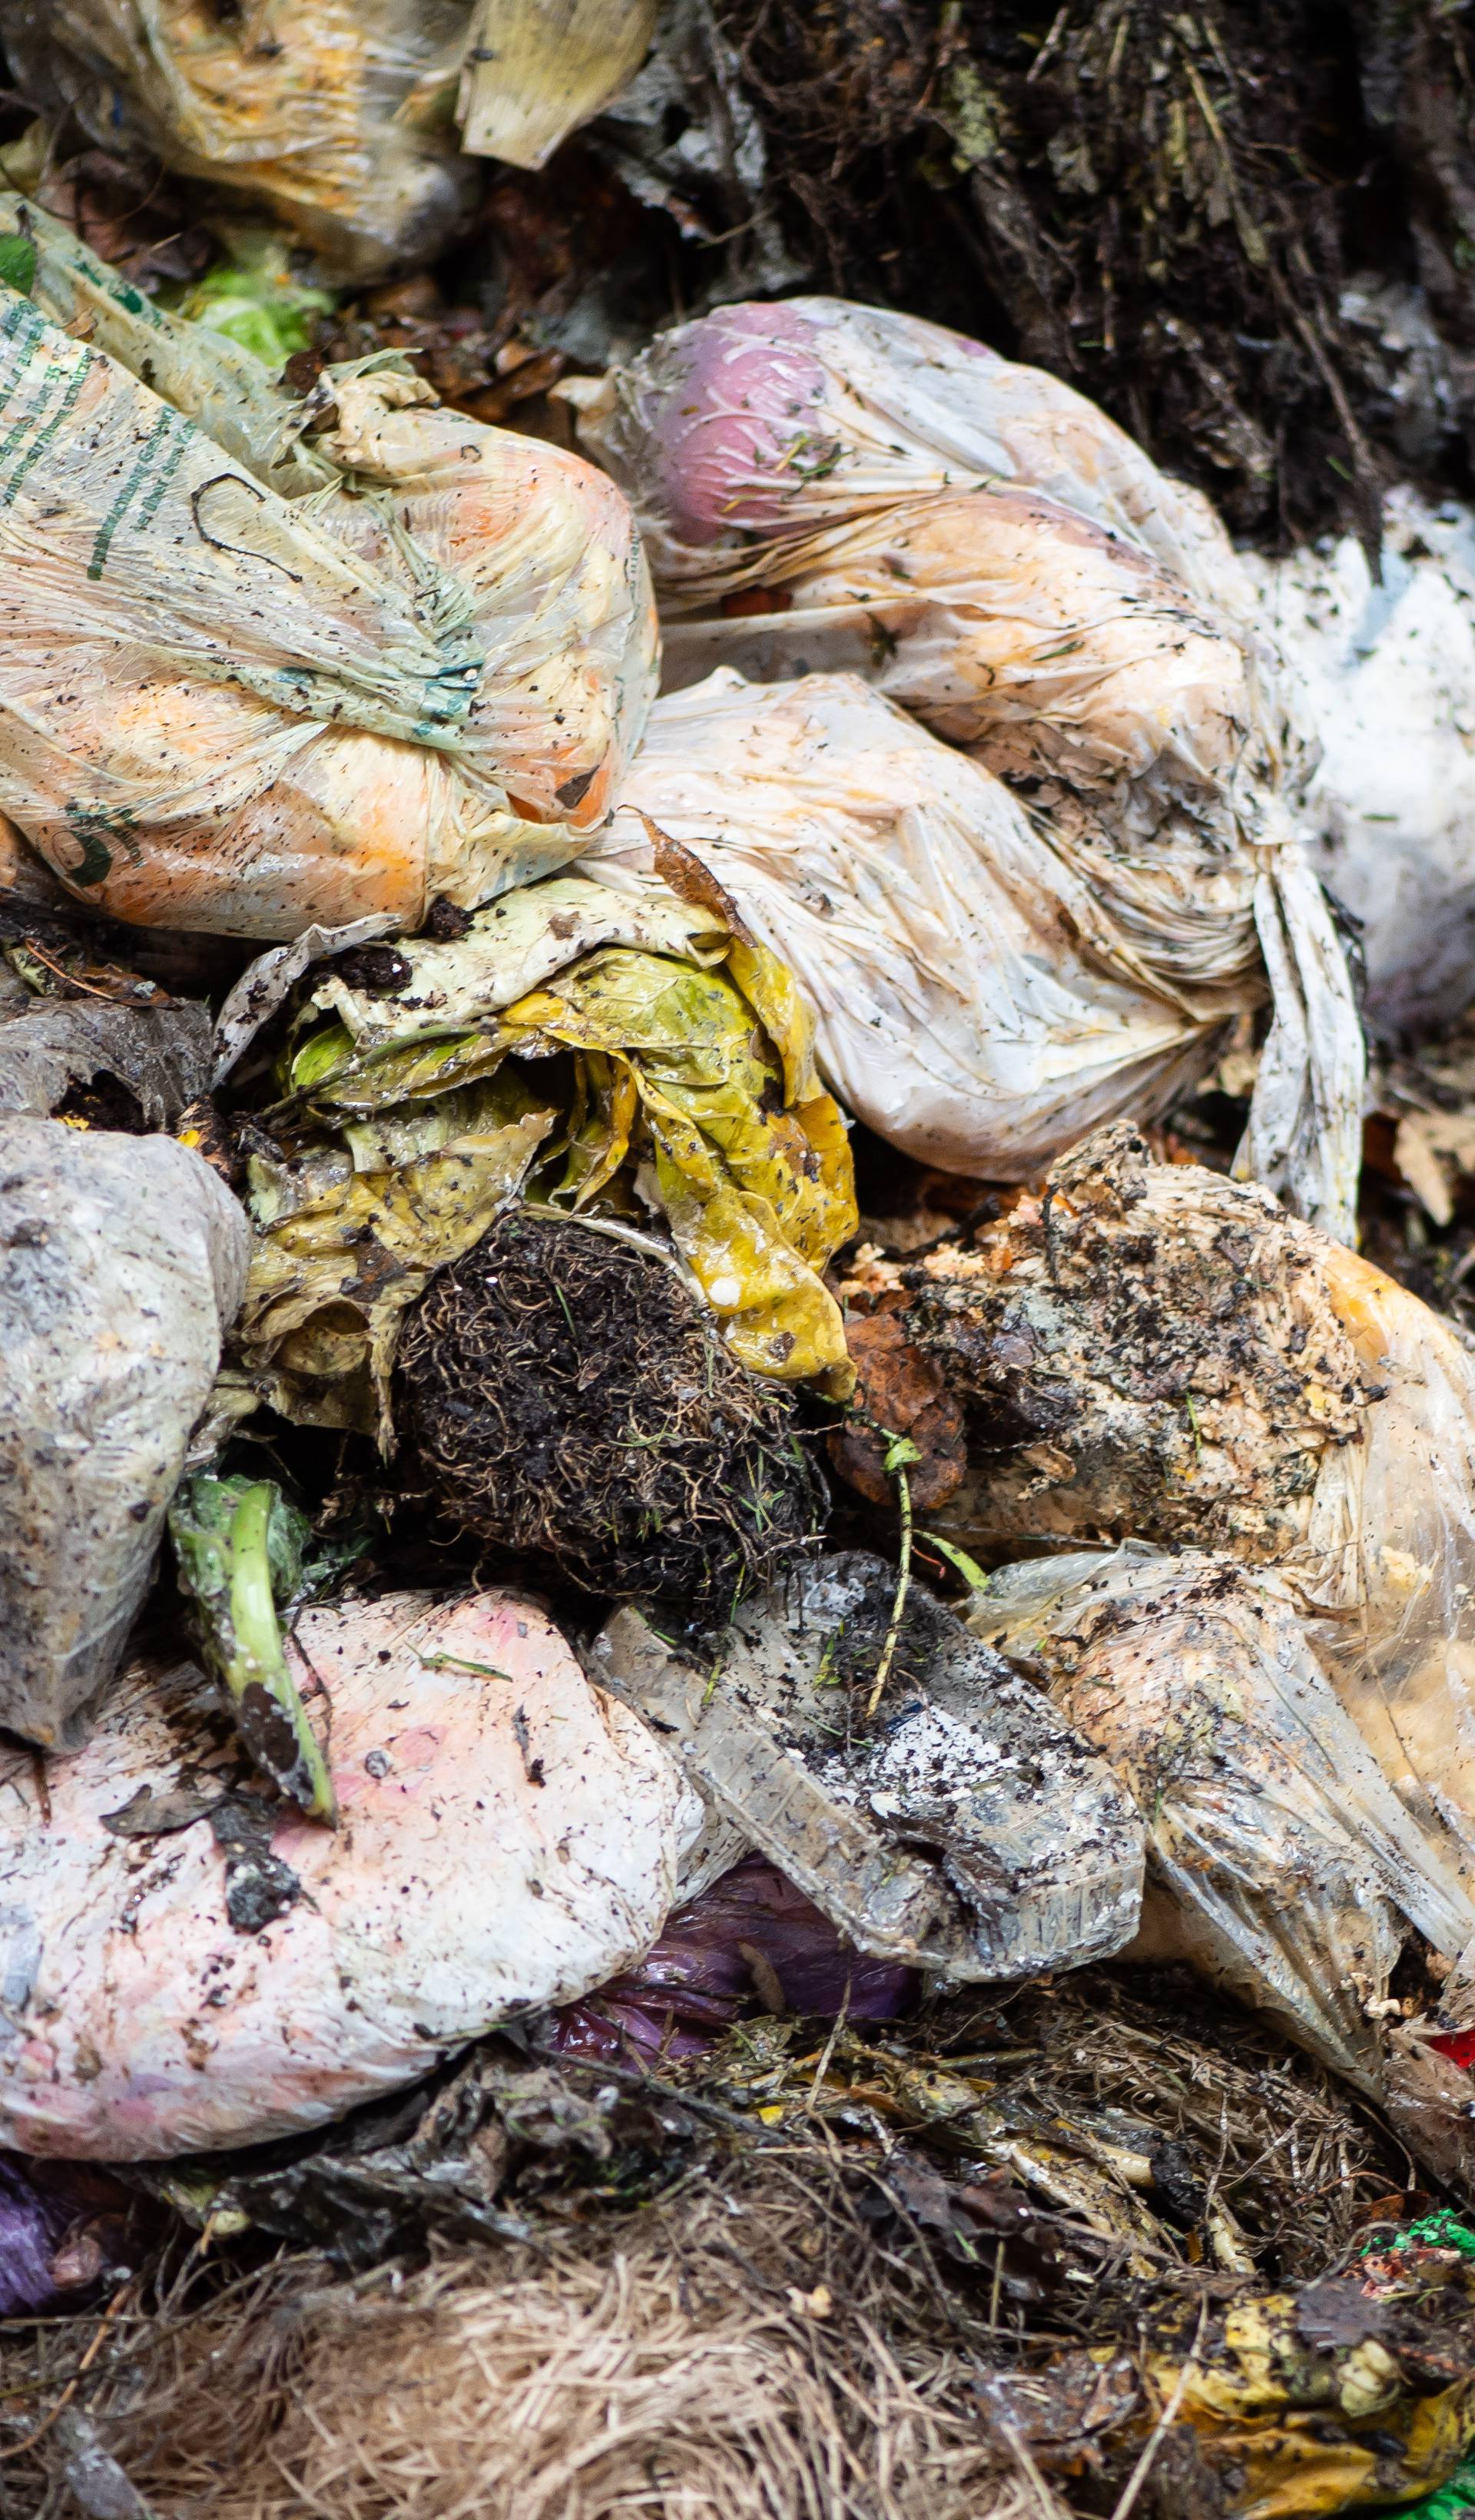 City cleaners control organic bins